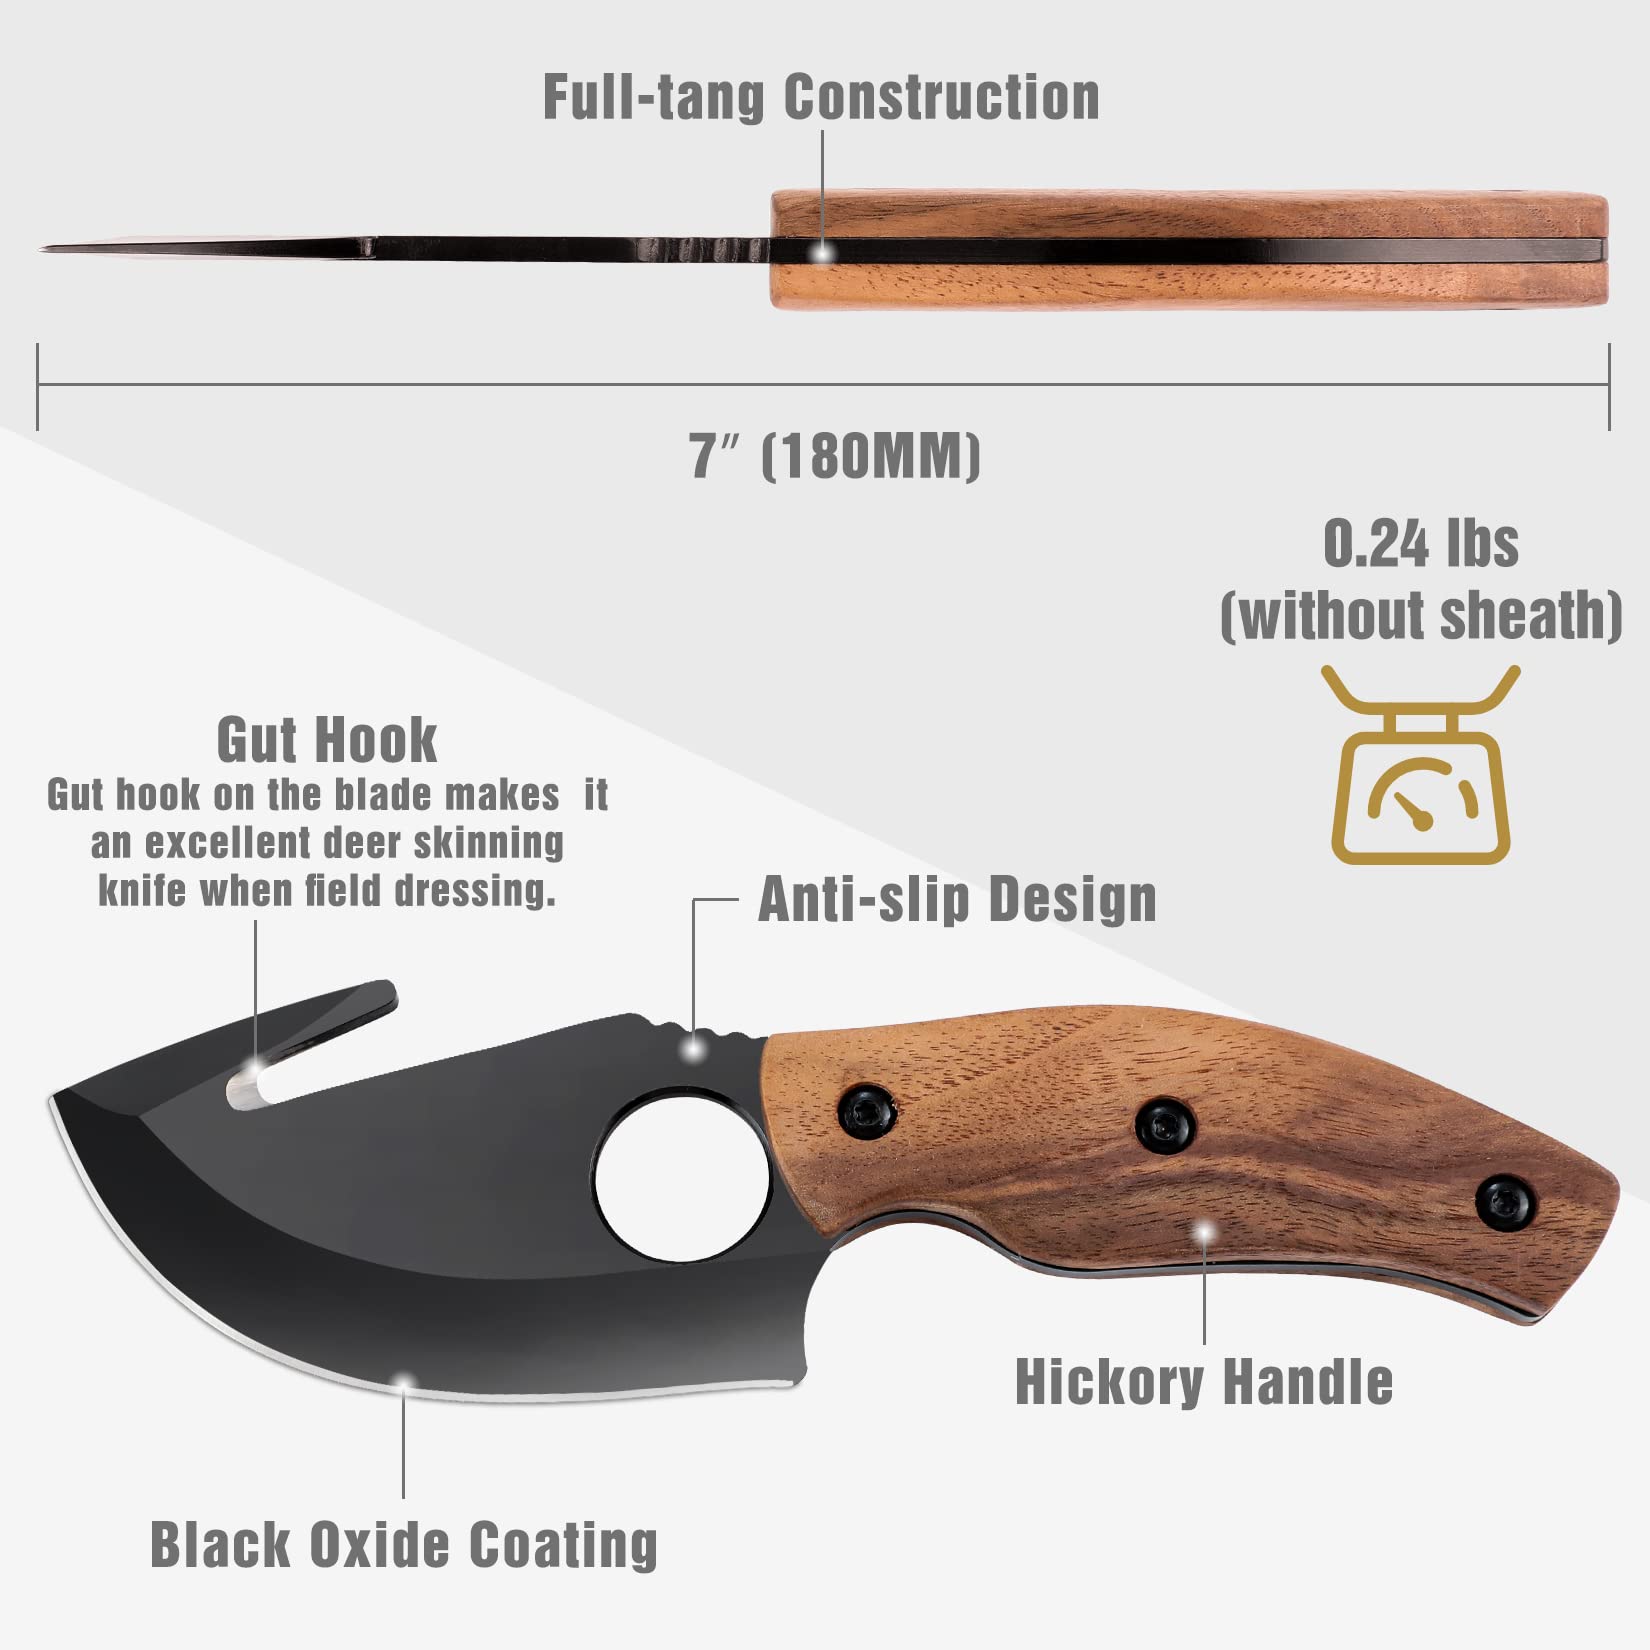 Swiss+Tech 2PC Fixed Blade Hunting Knife Set, 6-1/2